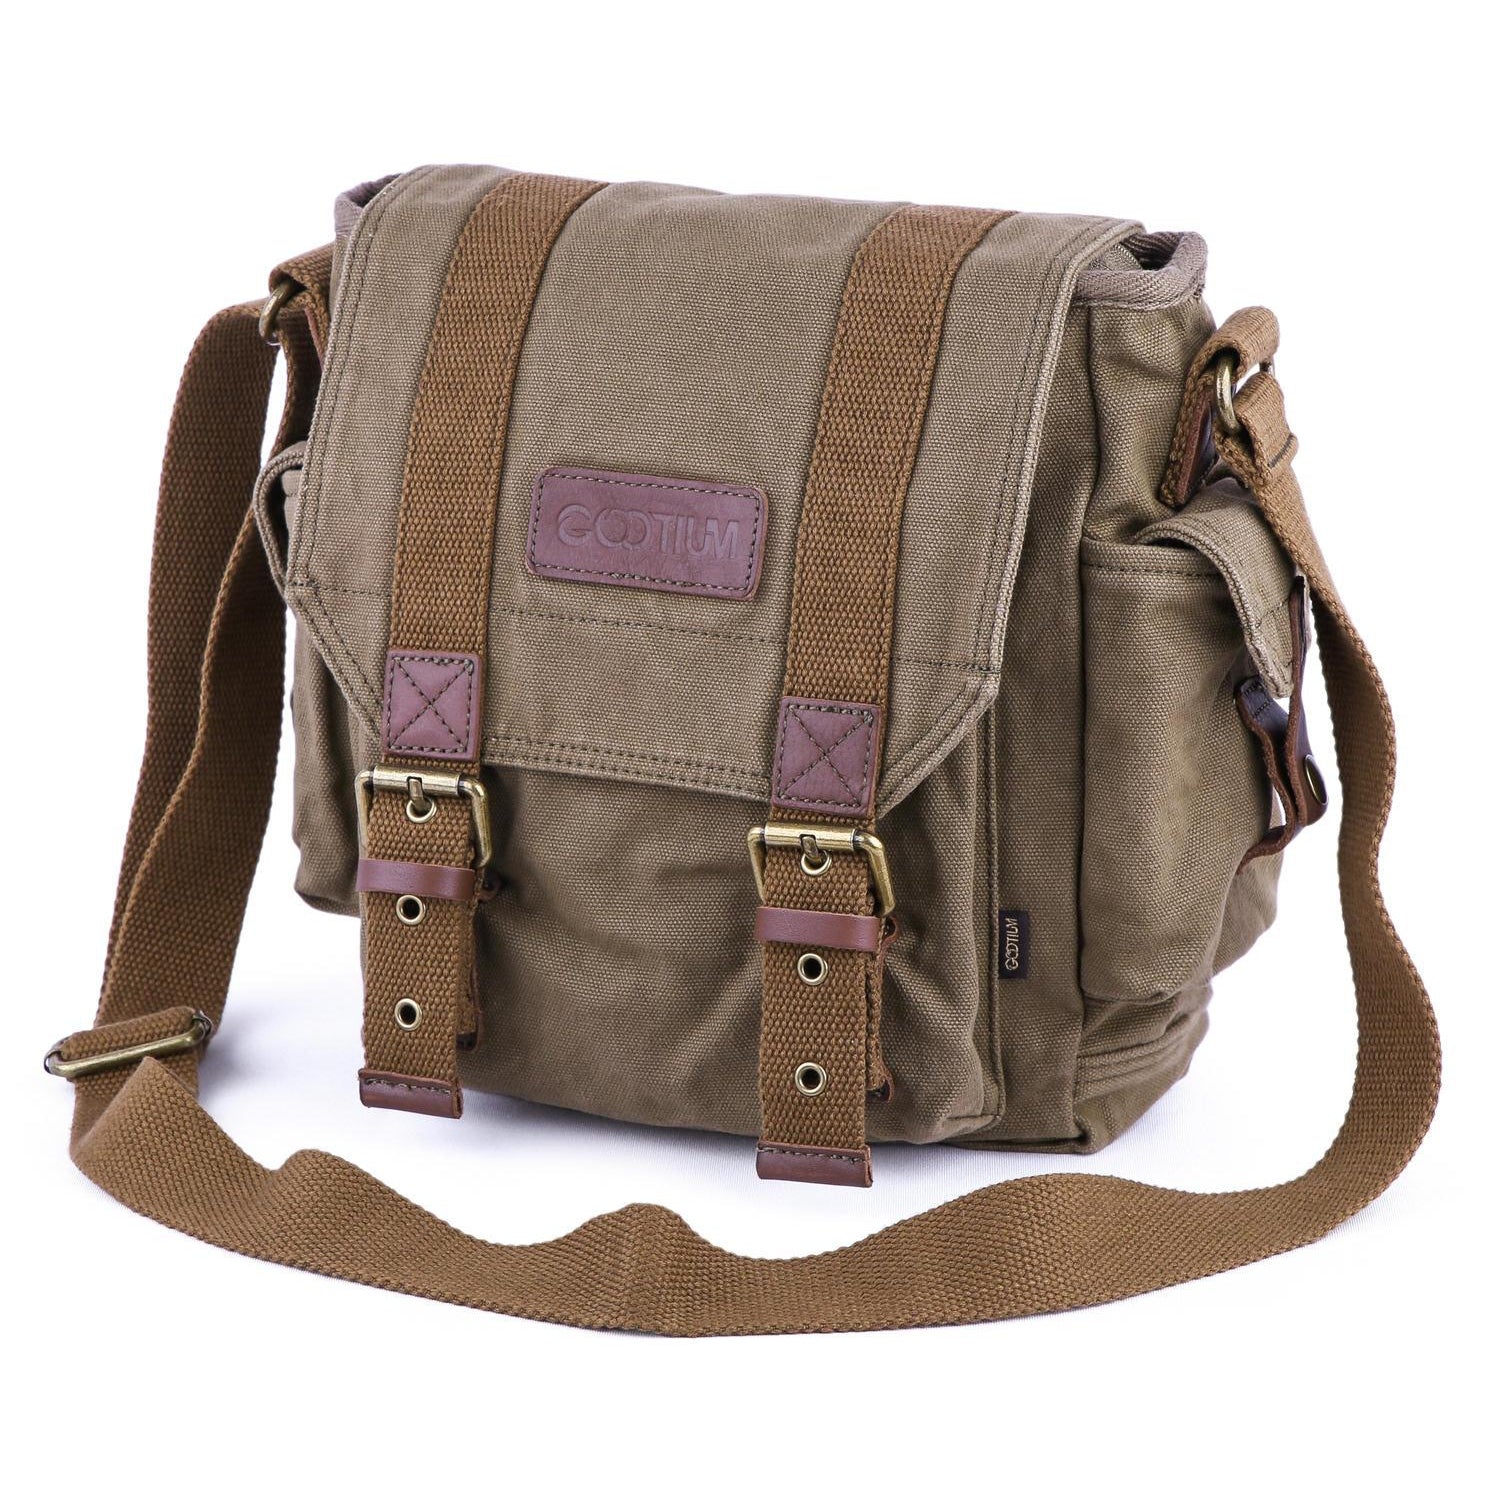 Gootium Canvas Messenger Bag Vintage Shoulder Bag 16 Laptop Sleeve Bag  Courier Style Purse Crossbody Bag